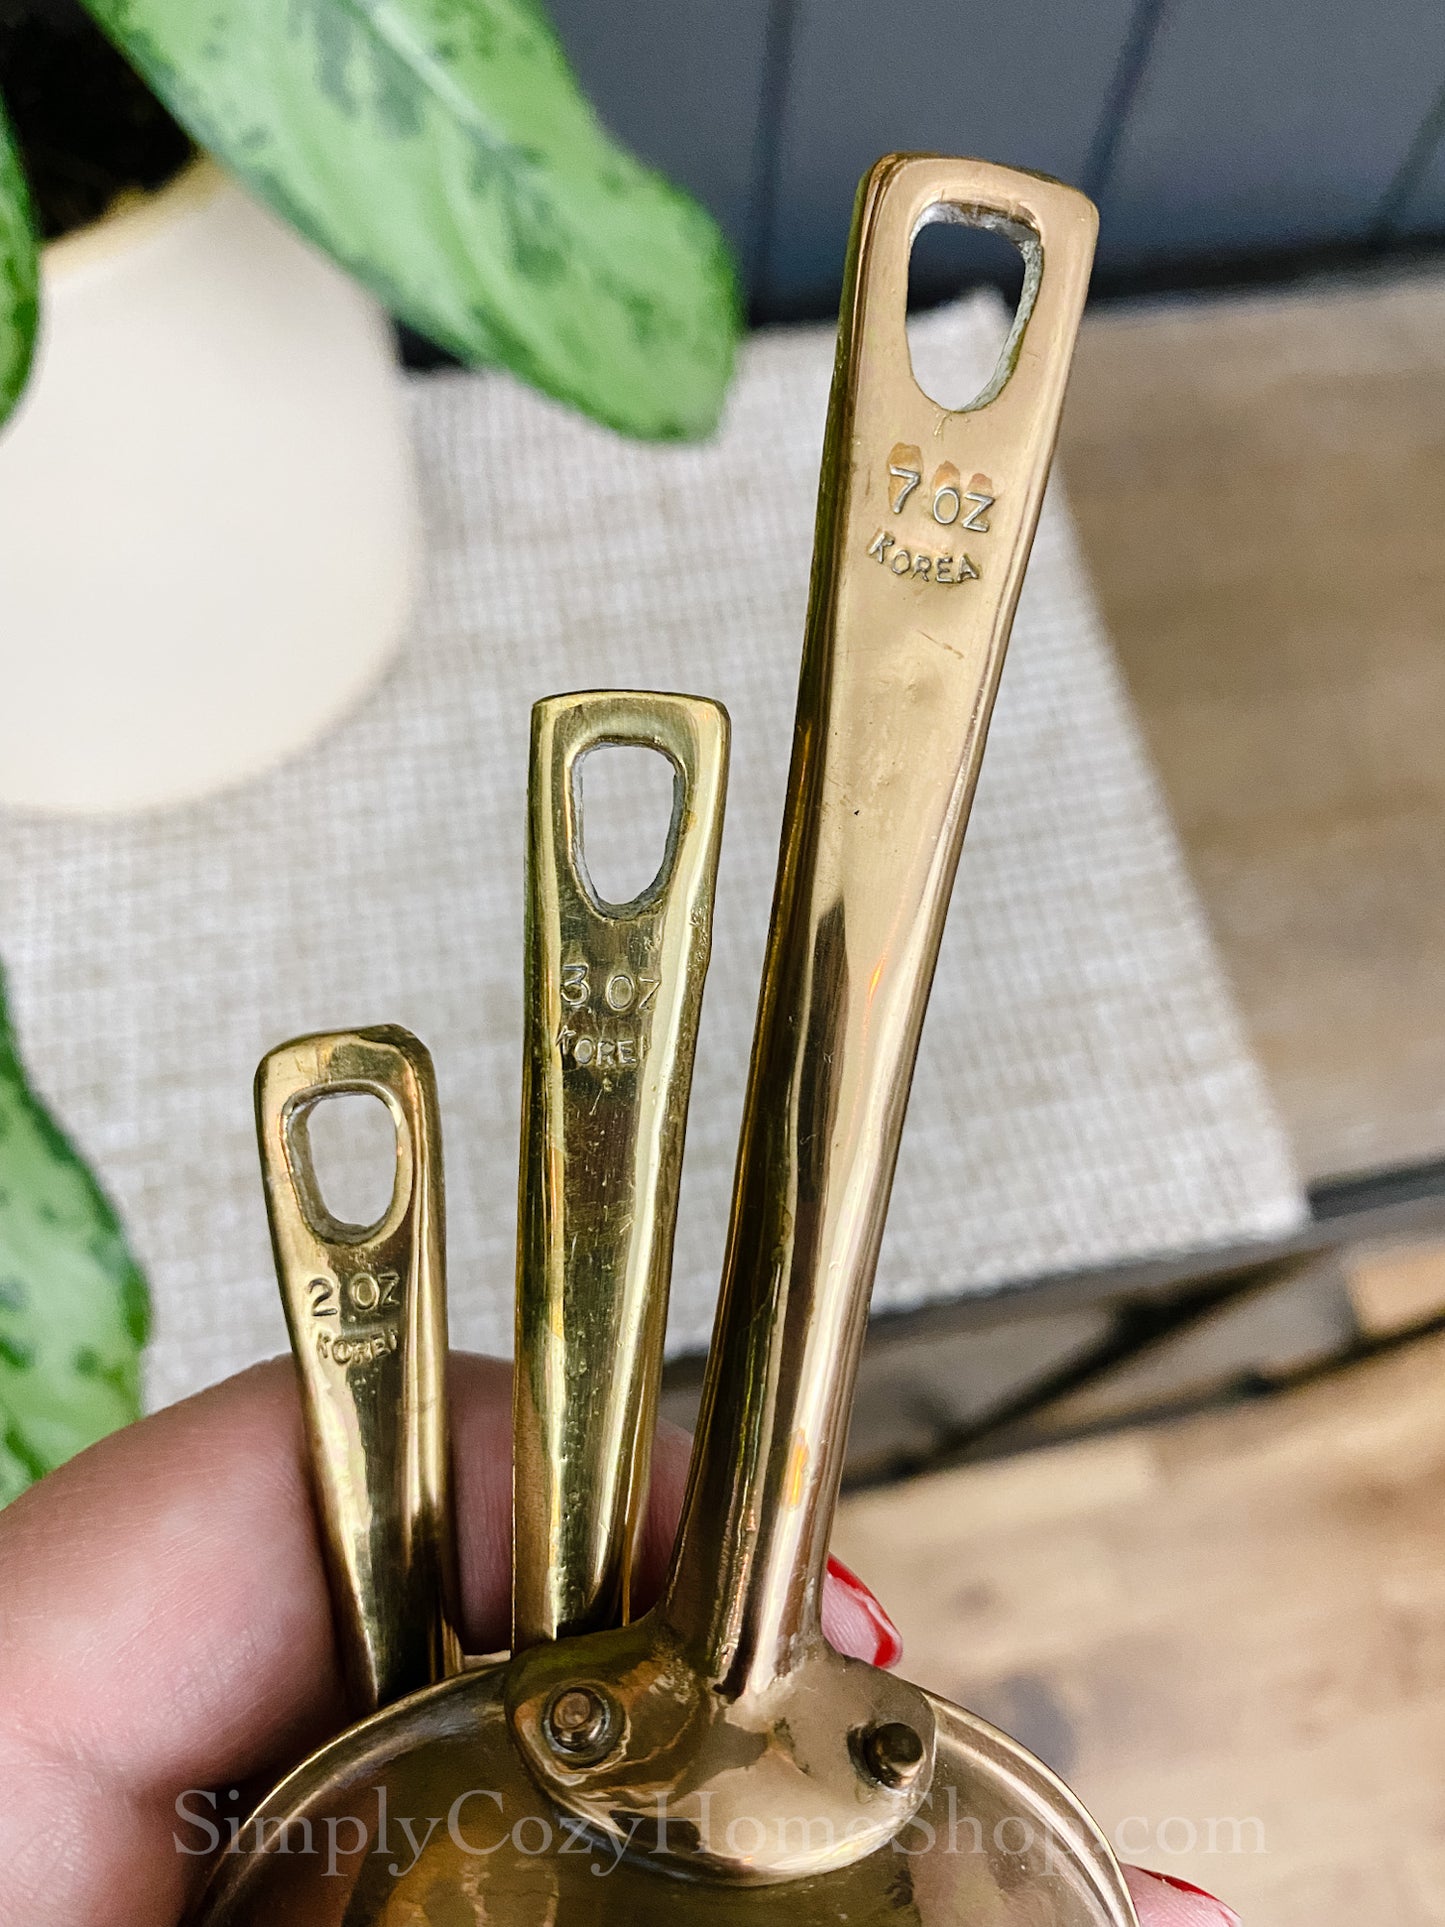 Brass Scoops - set of 3 vintage measuring scoops